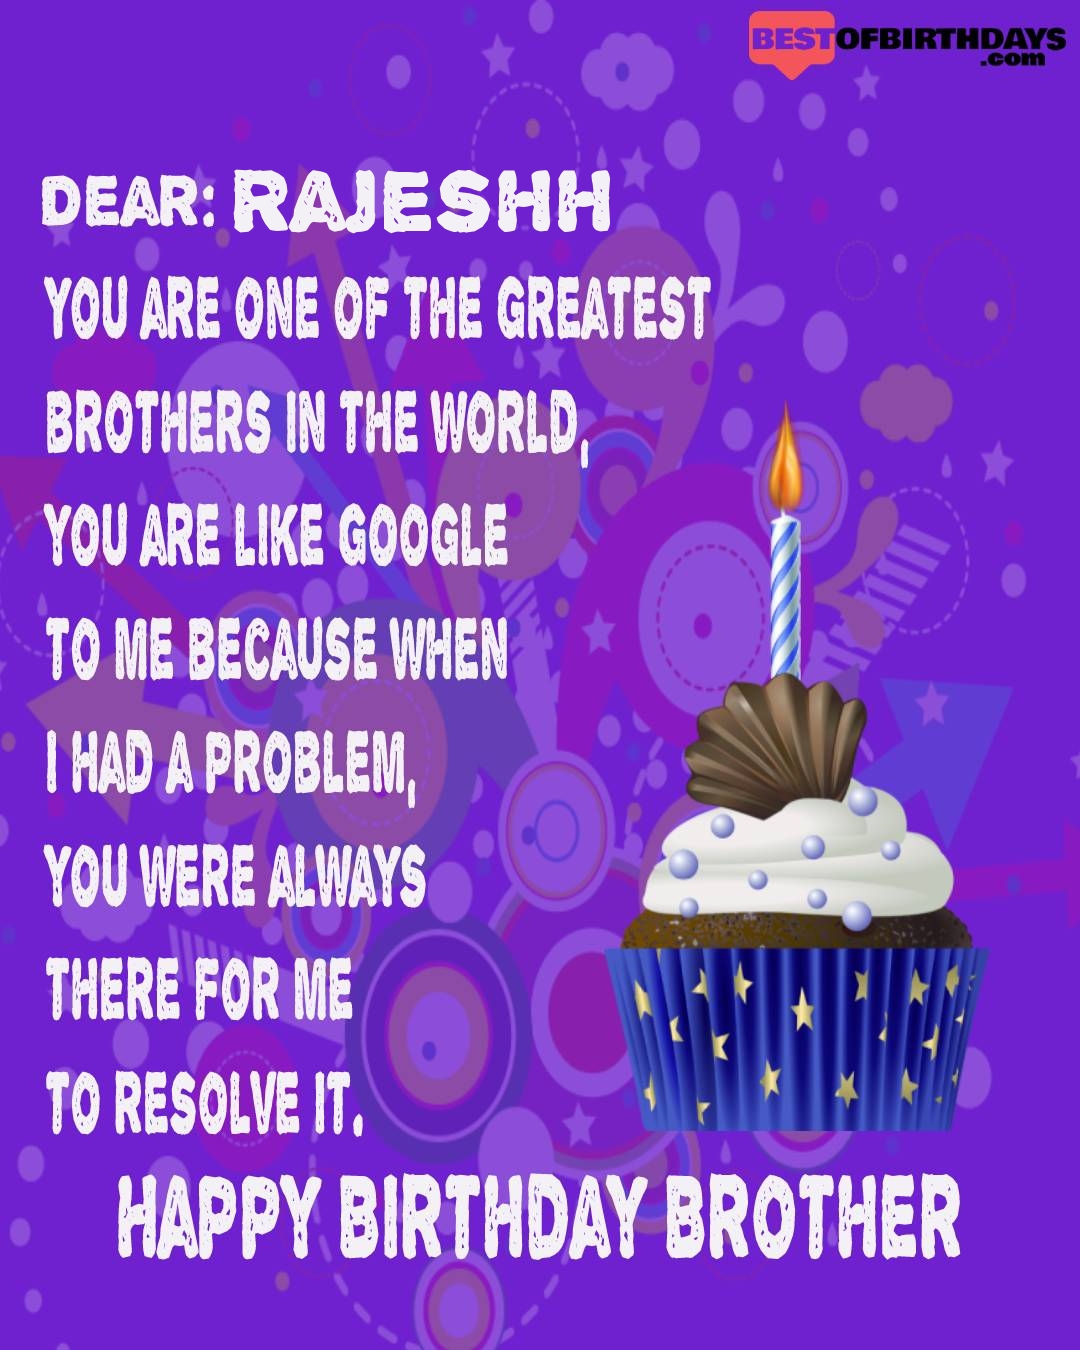 Happy birthday rajeshh bhai brother bro